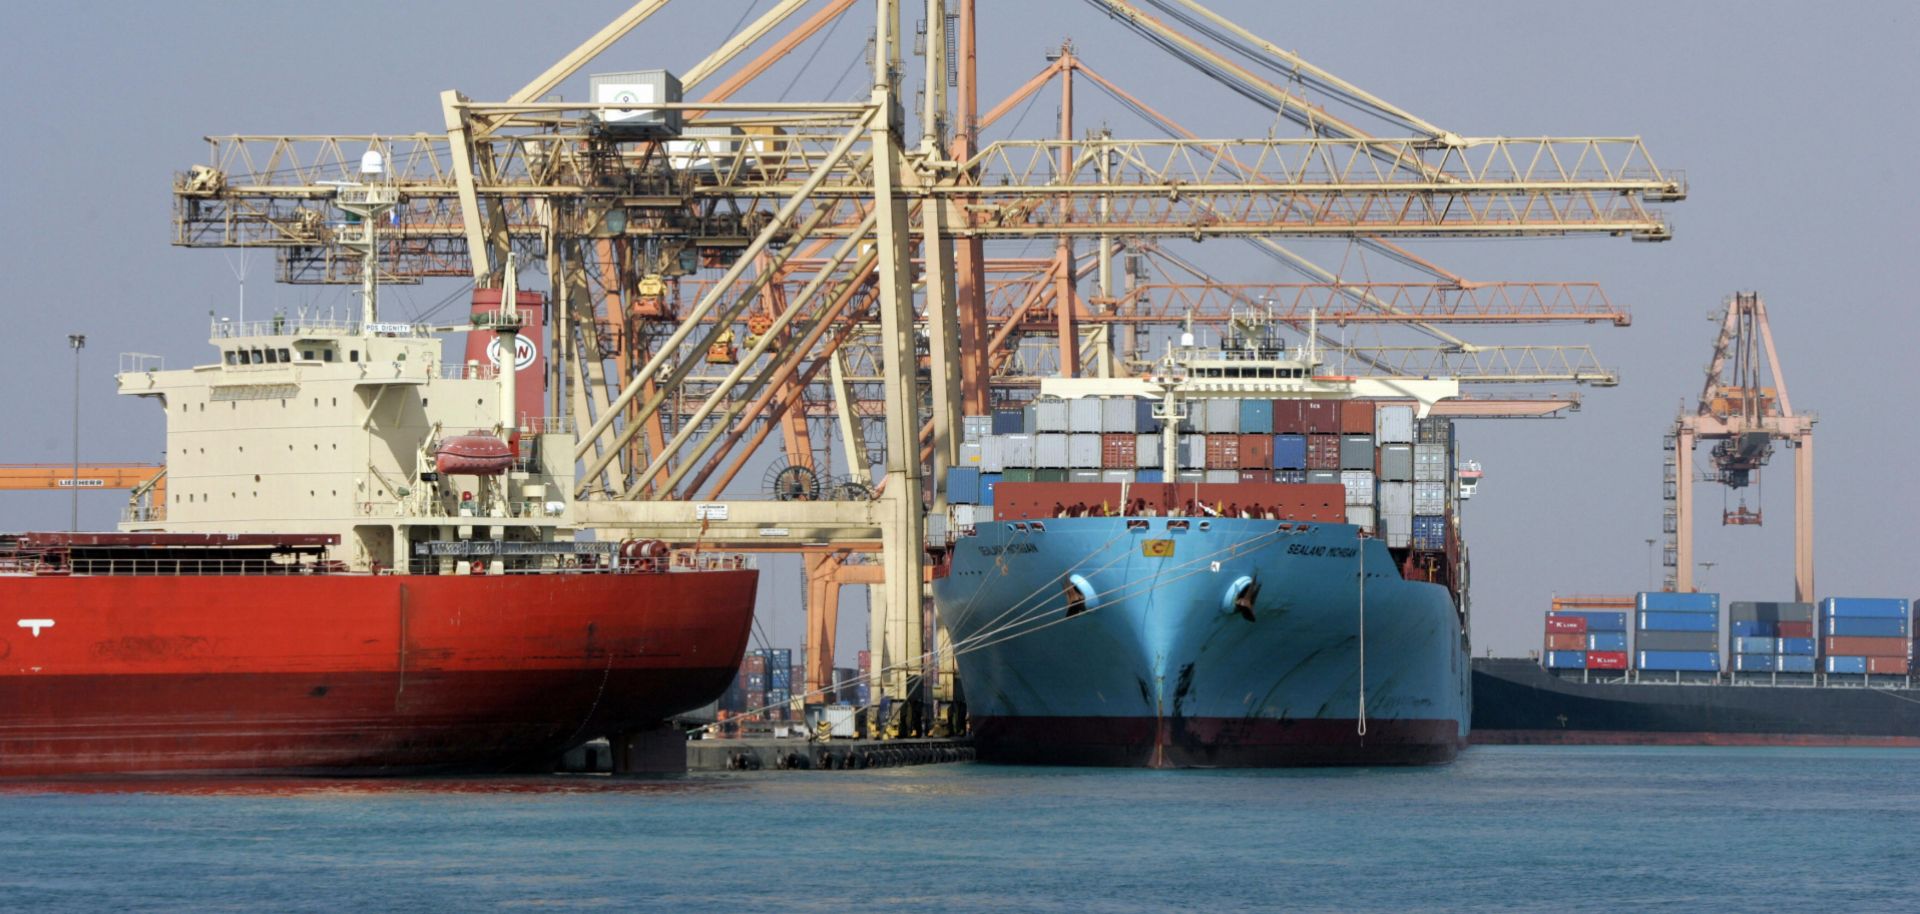 Containerships in Saudi Arabia's Jeddah Islamic Port on Dec. 13, 2007.